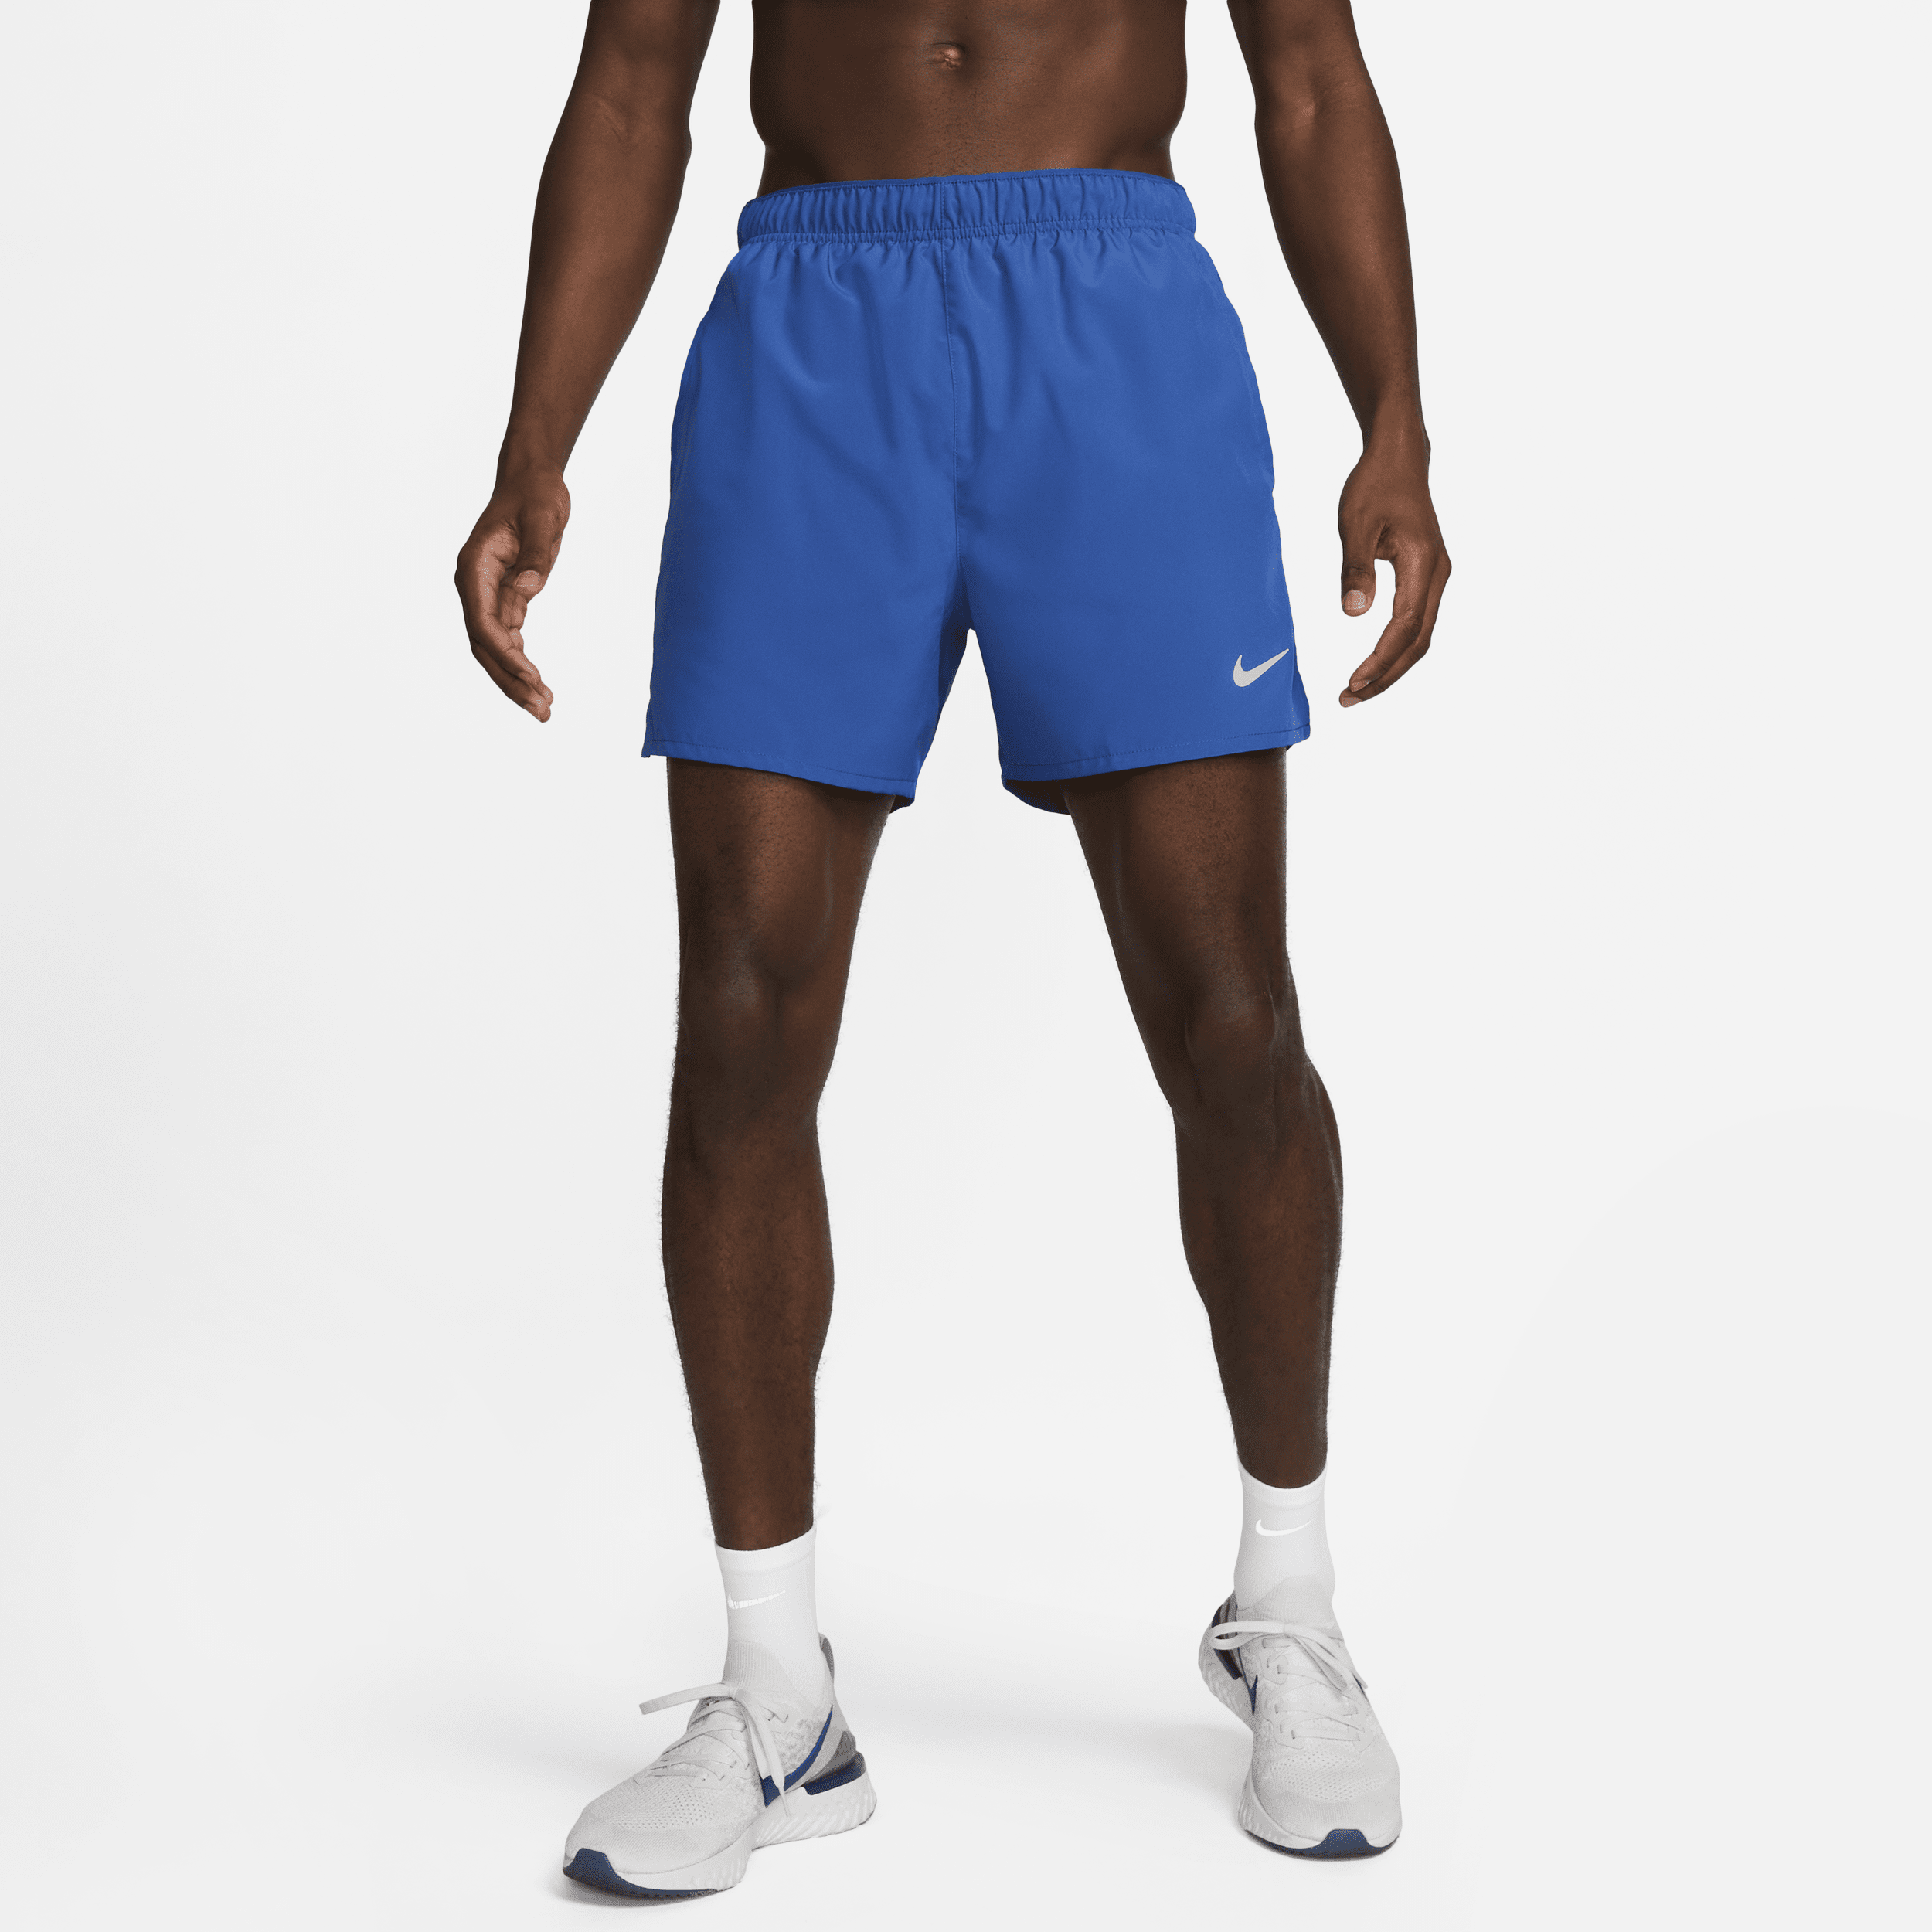 Shorts da running Dri-FIT con slip foderati 13 cm Nike Challenger – Uomo - Blu